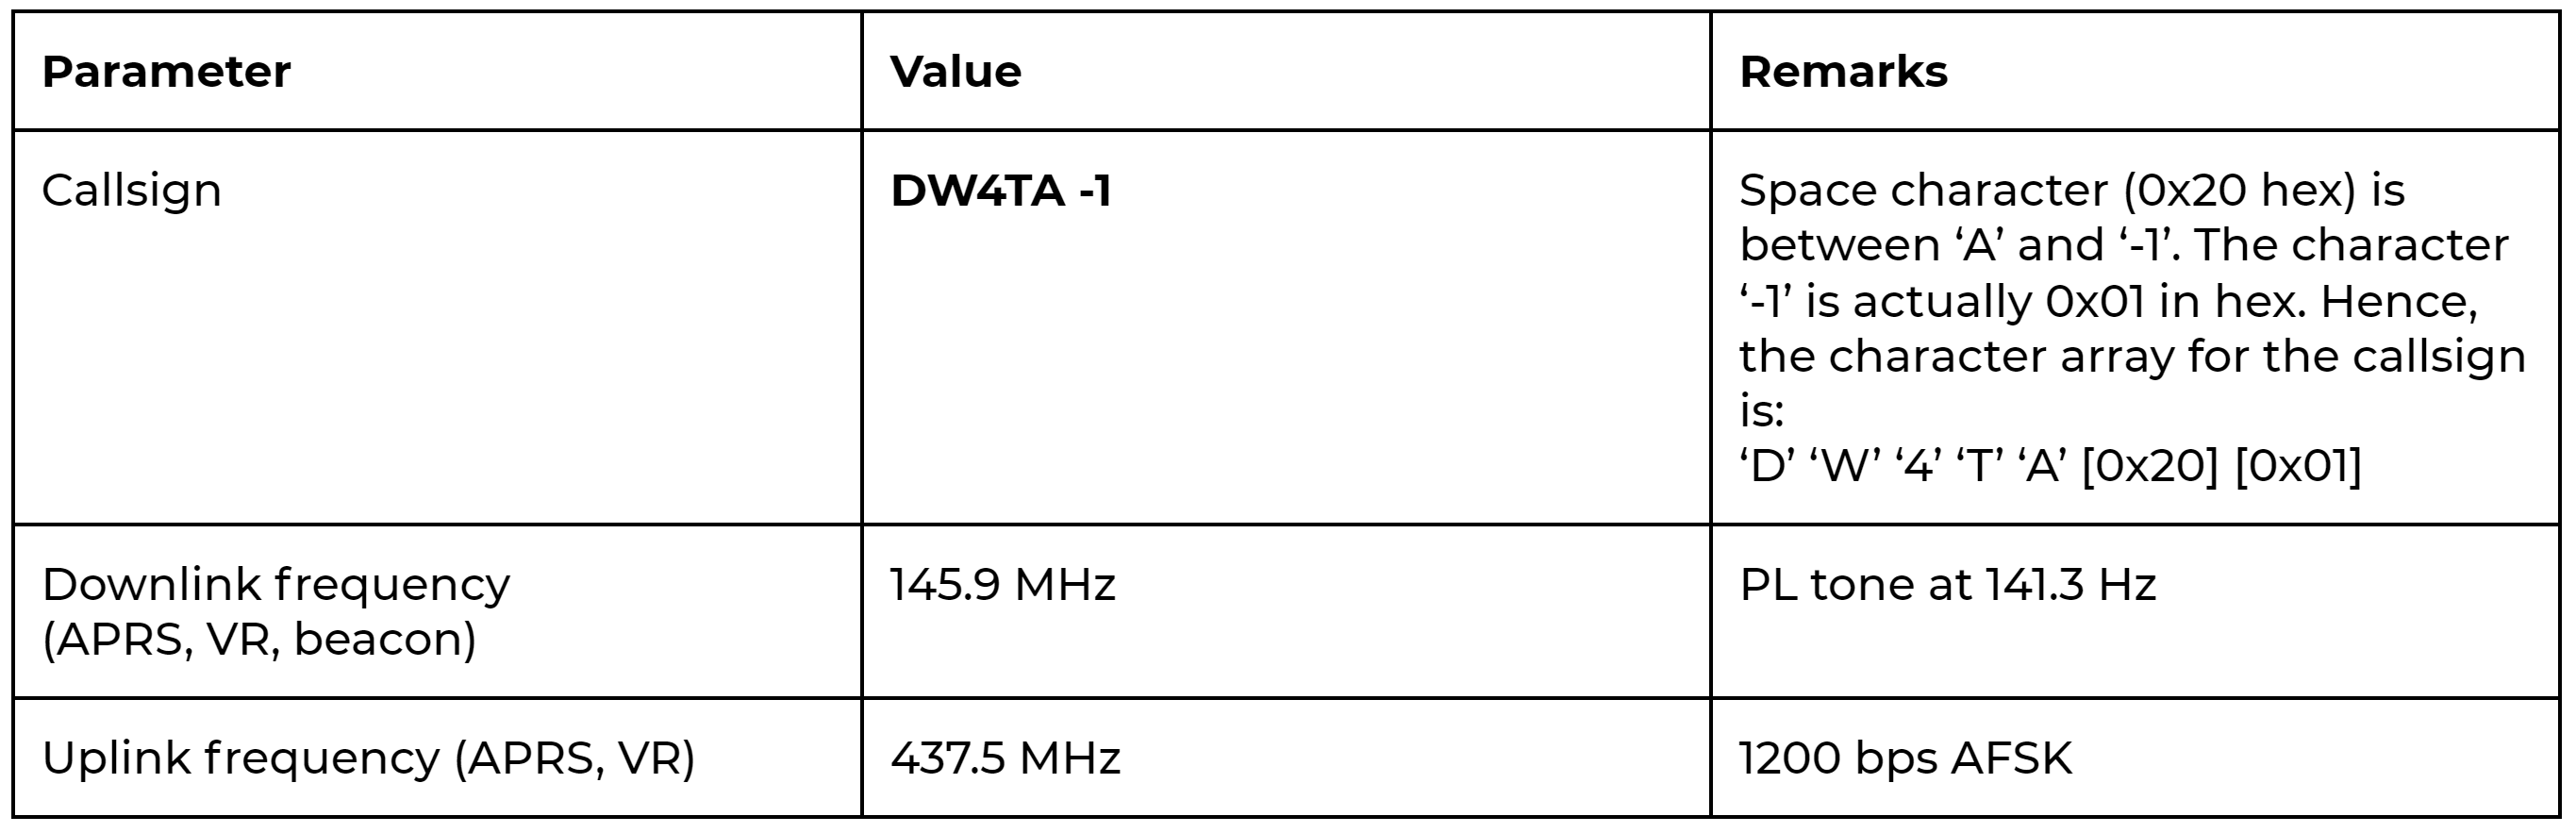 Diwata 2 Po 101 Amateur Radio Unit Information And Usage By Phl Microsat Phl Microsat